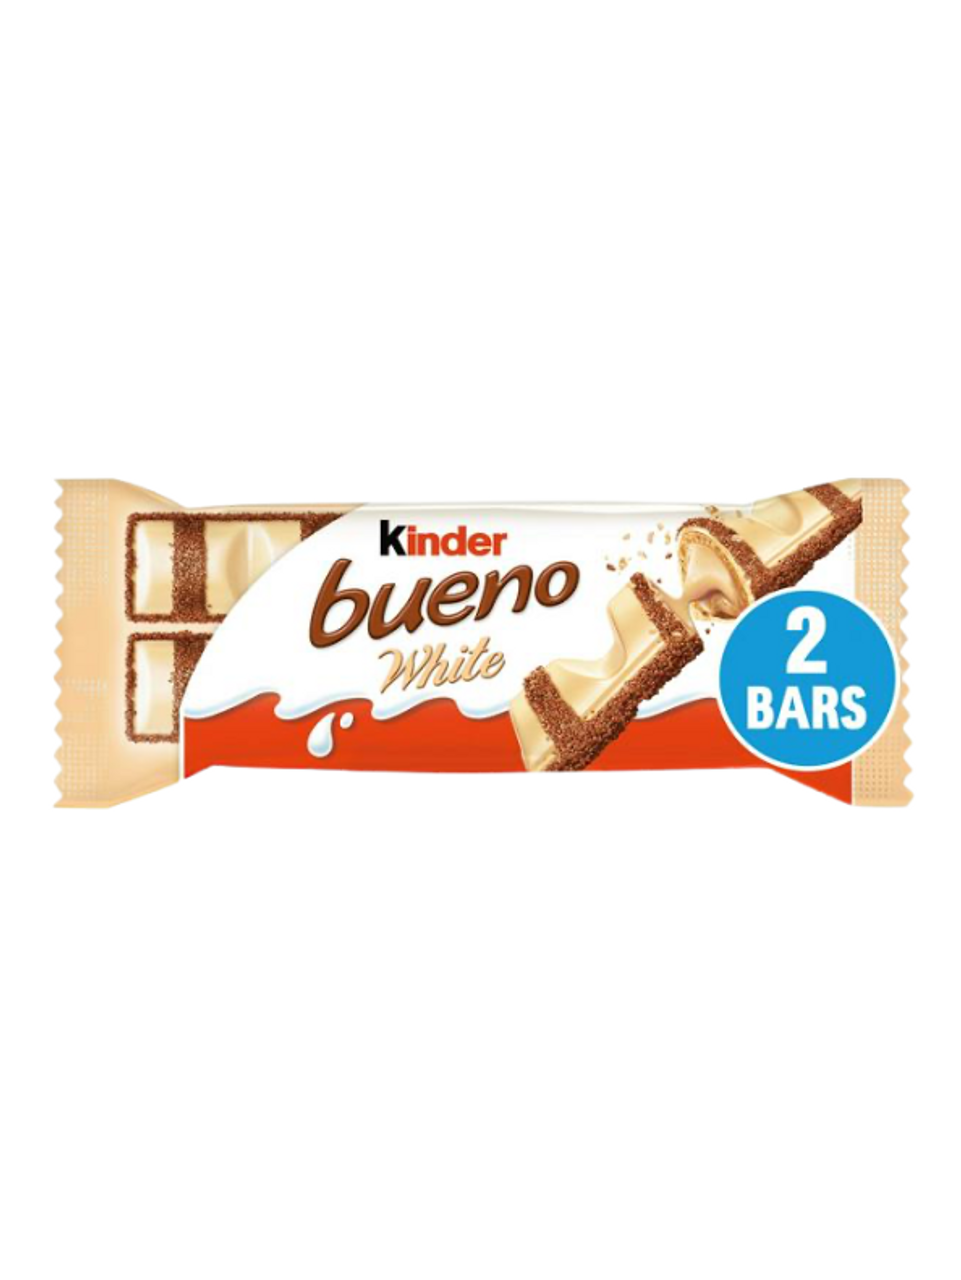 Kinder Bueno Milk Chocolate With Milk & Hazelnut 43g Bars Price in